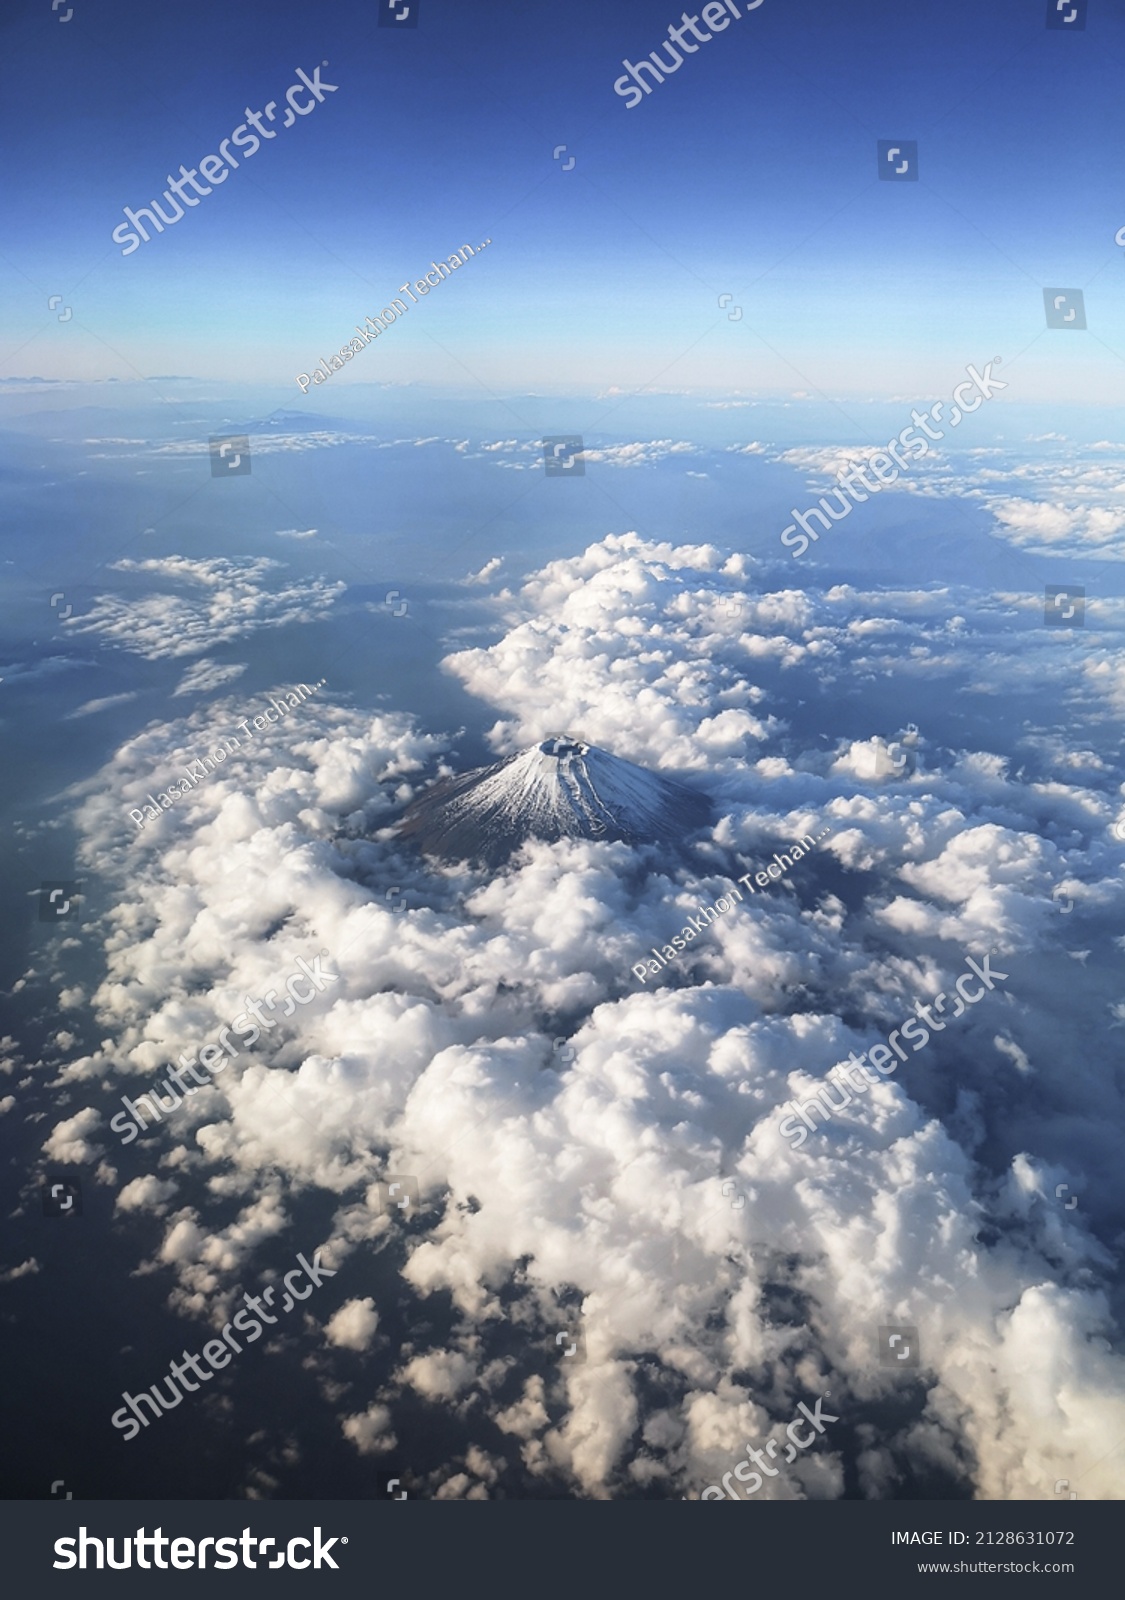 3,623 Cloudy fuji Images, Stock Photos & Vectors | Shutterstock